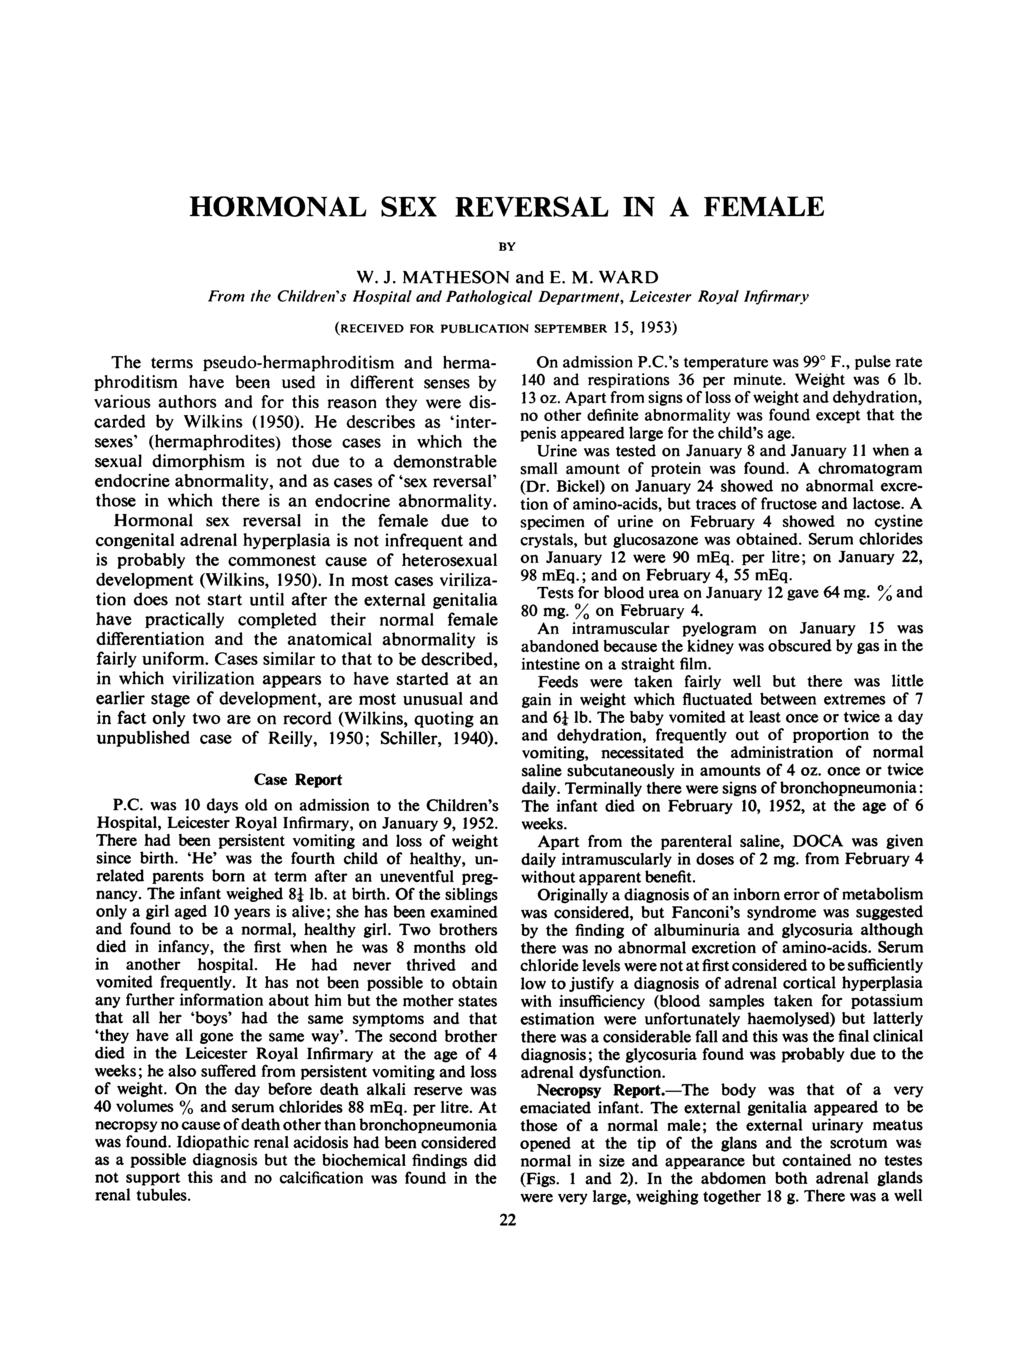 HORMONAL SEX REVERSAL IN A FEMALE BY W. J. MA